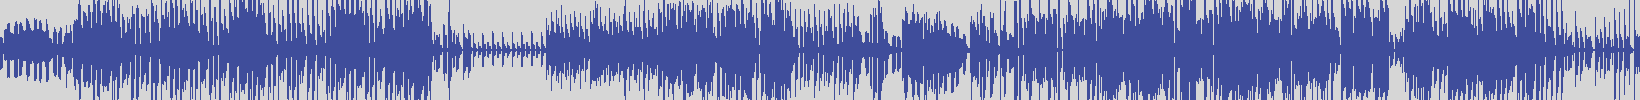 nf_boyz_records [NFY080] Jin Tonique - Not Easy [Mark Kay's Deep Mix] audio wave form